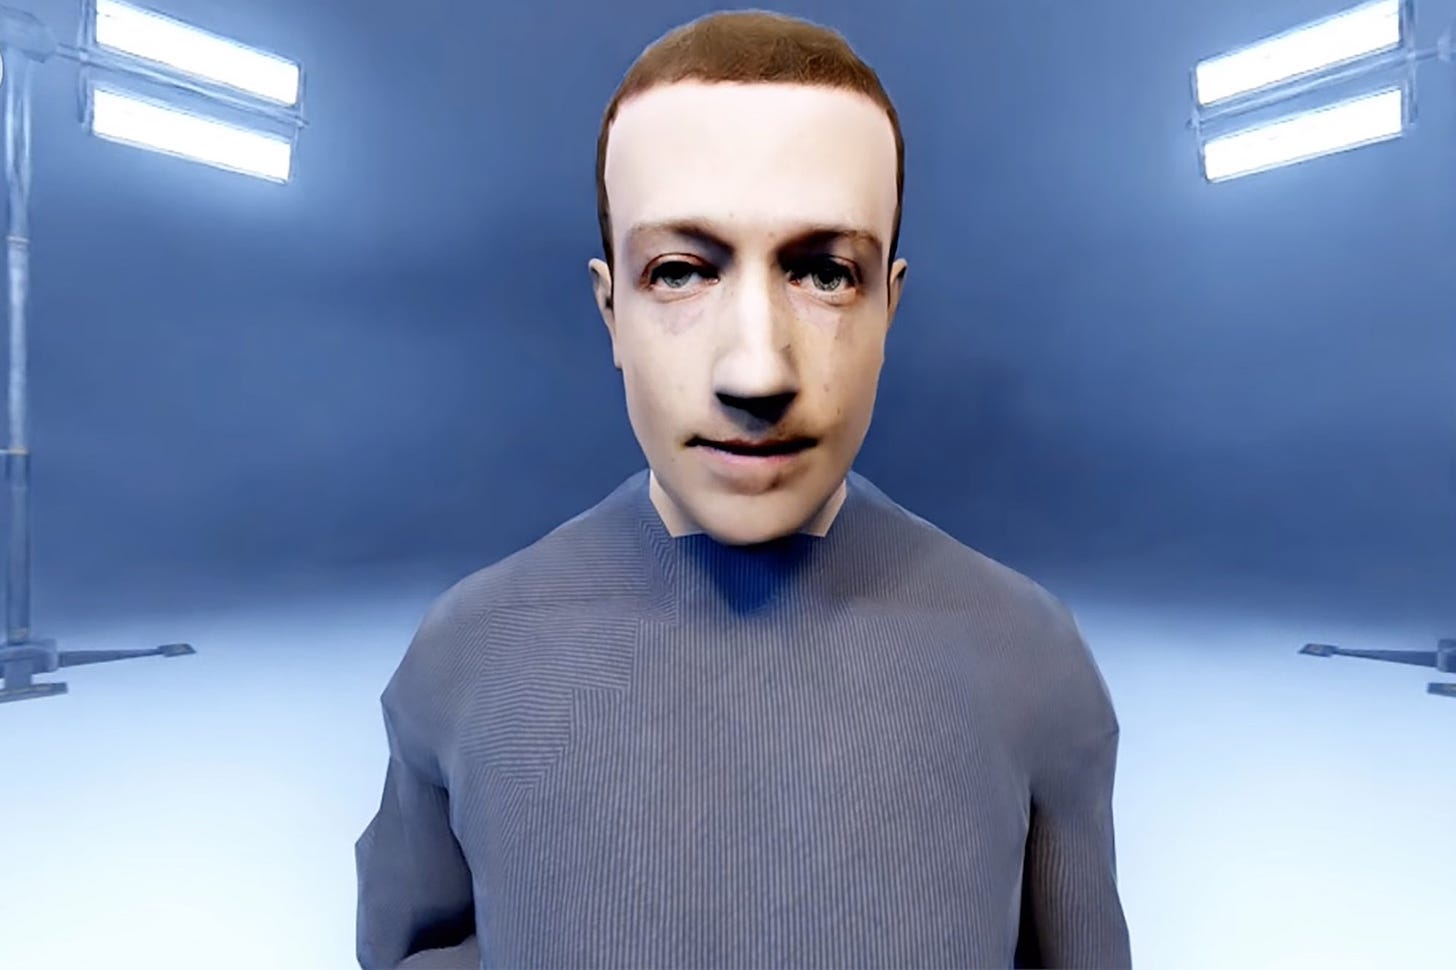 Creepy Metaverse spoof depicts Mark Zuckerberg as BBQ fiend